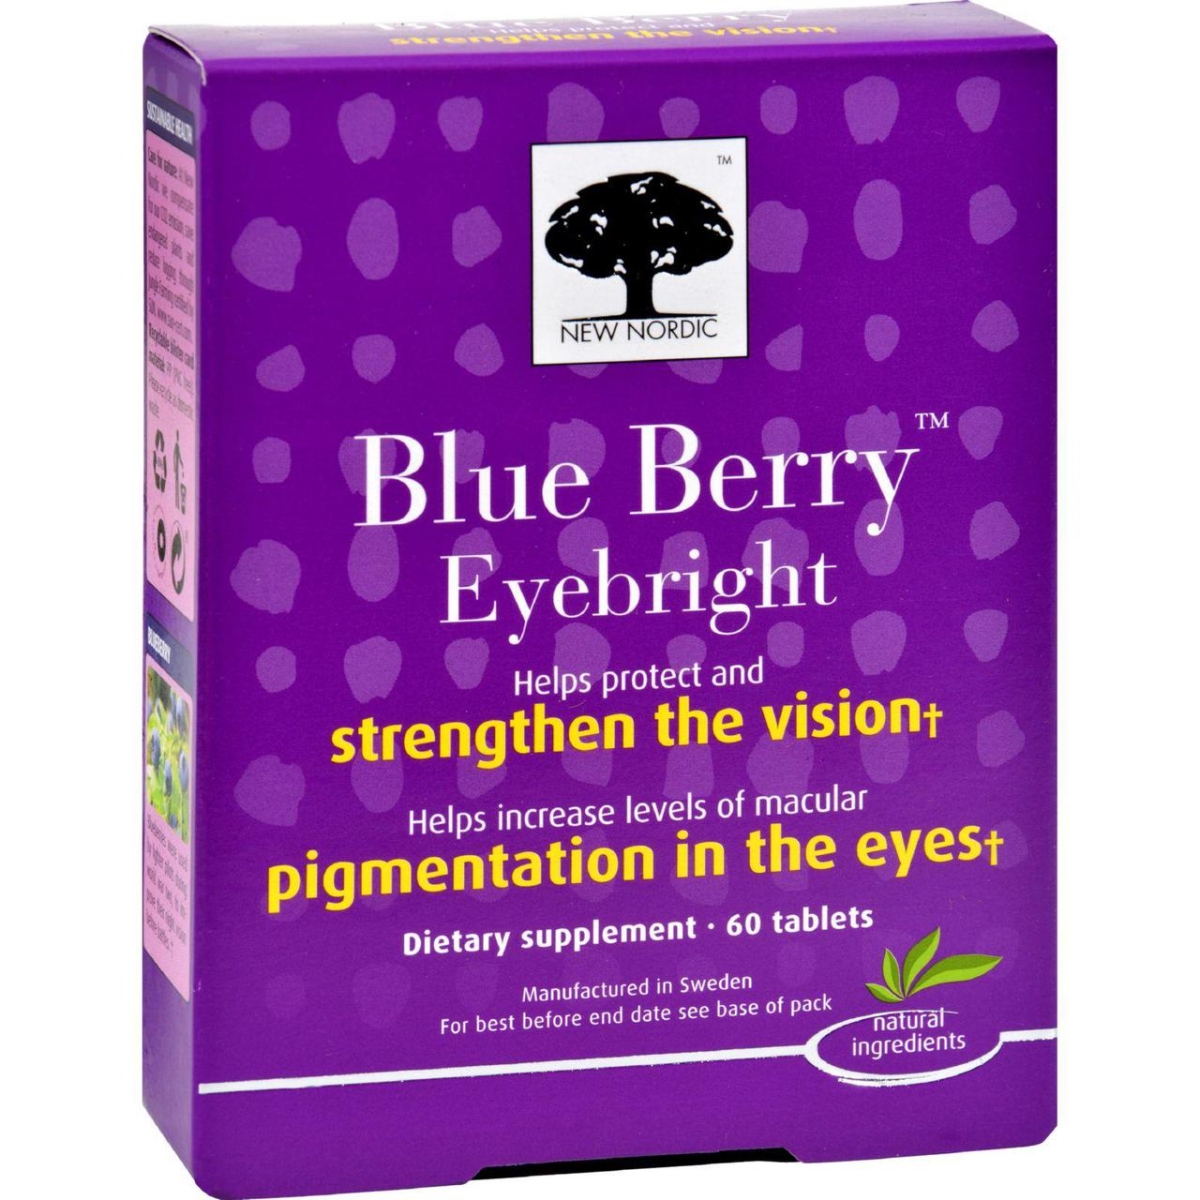 Hg1519073 Blue Berry Eyebright - 60 Tablets